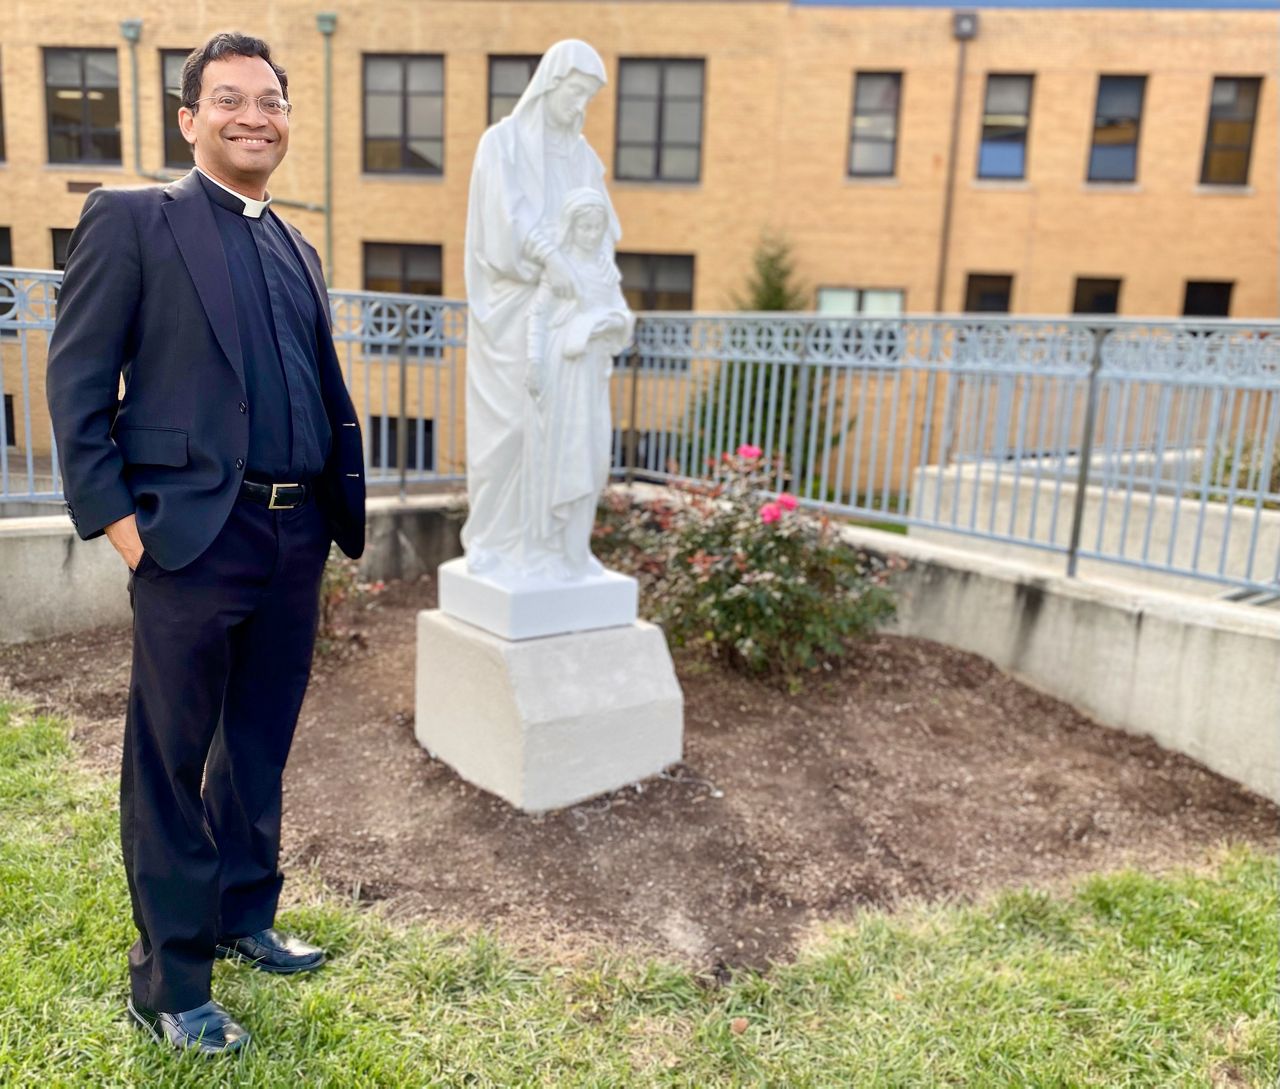 Fr. Earl Fernandes, pastor at St. Ignatius of Loyola (Spectrum News/Casey Weldon)